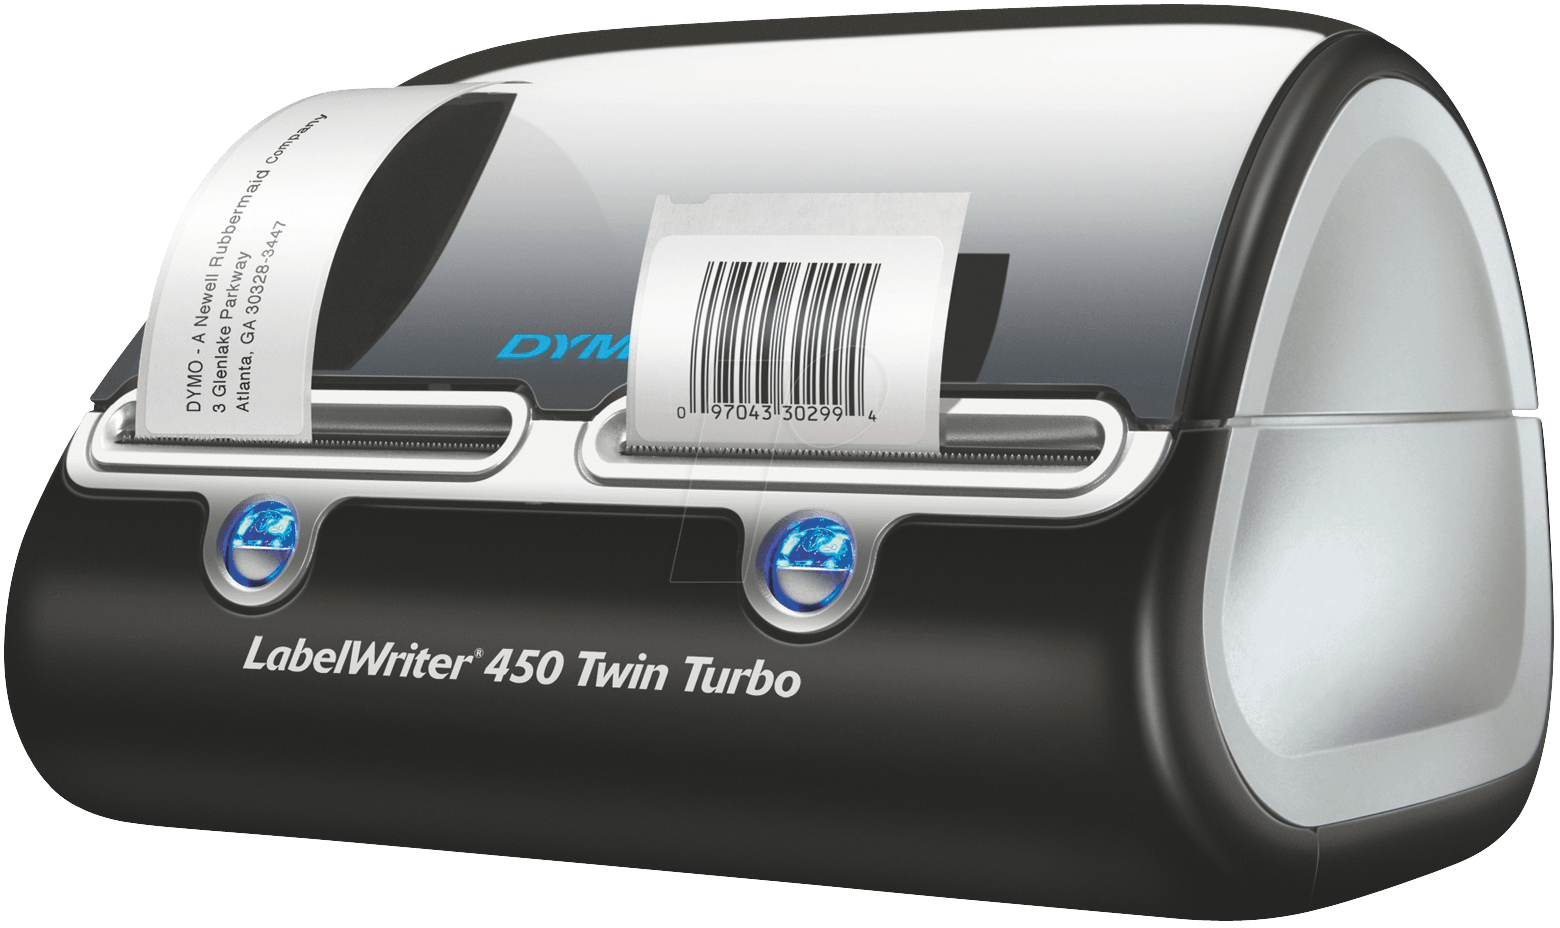 Dymo labelwriter 450 twin turbo software download, free